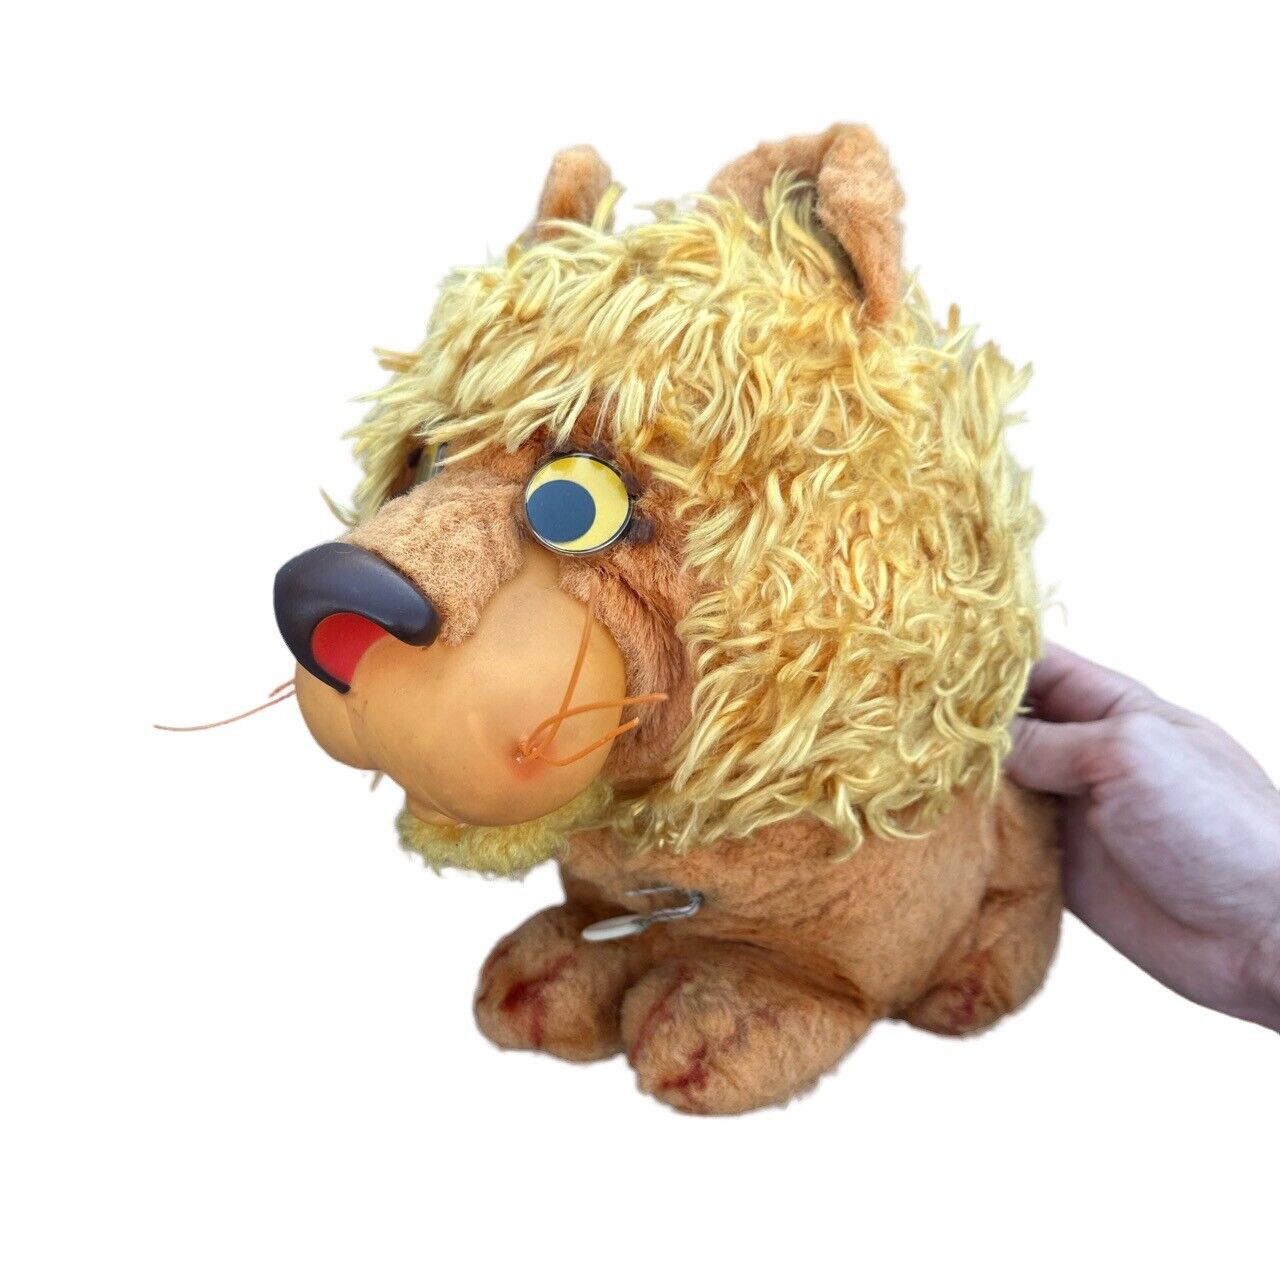 Vtg 1962 Larry the Talking Plush Lion Toy Yacker by Mattel~Pull String Works